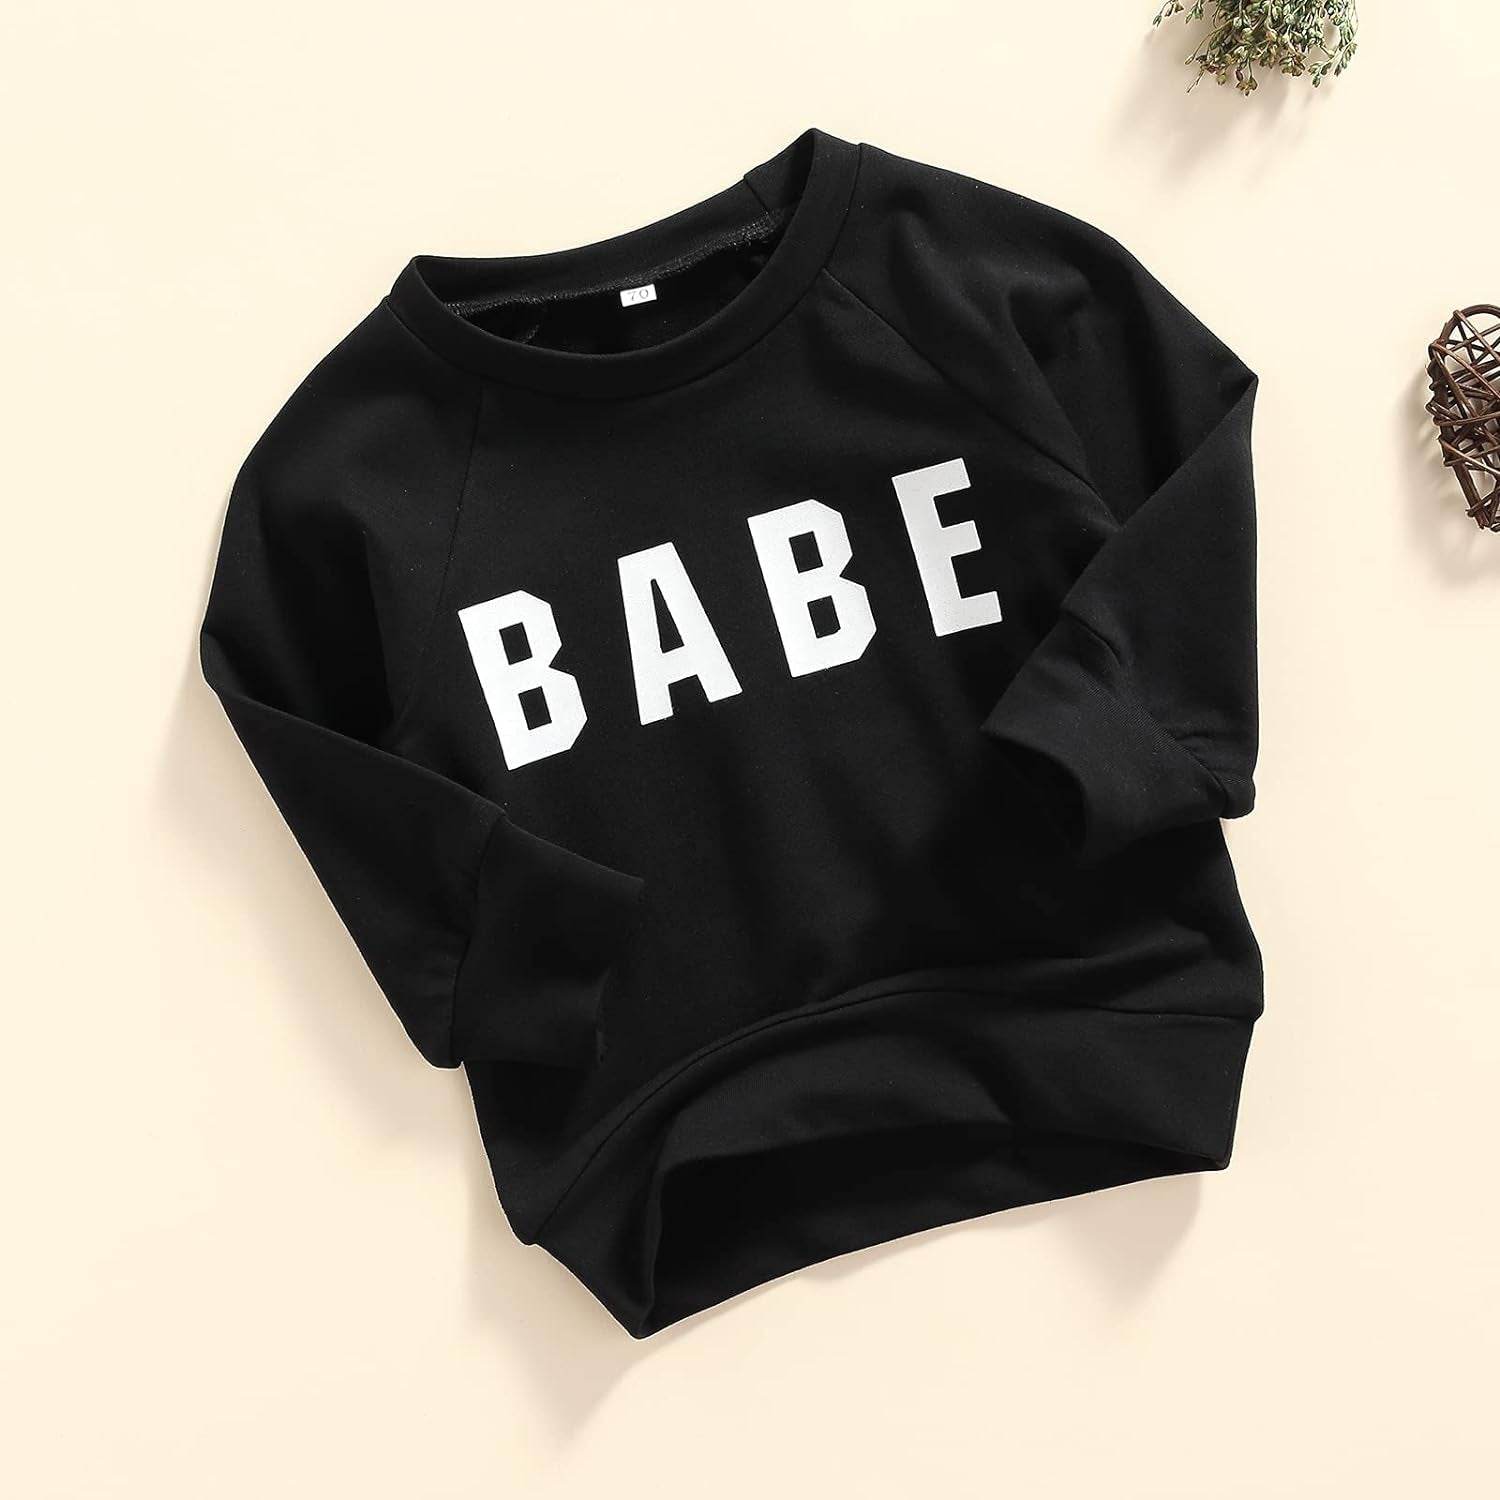 Toddler Baby Boy Girl Sweatshirt Sweater Top Shirt Clothes